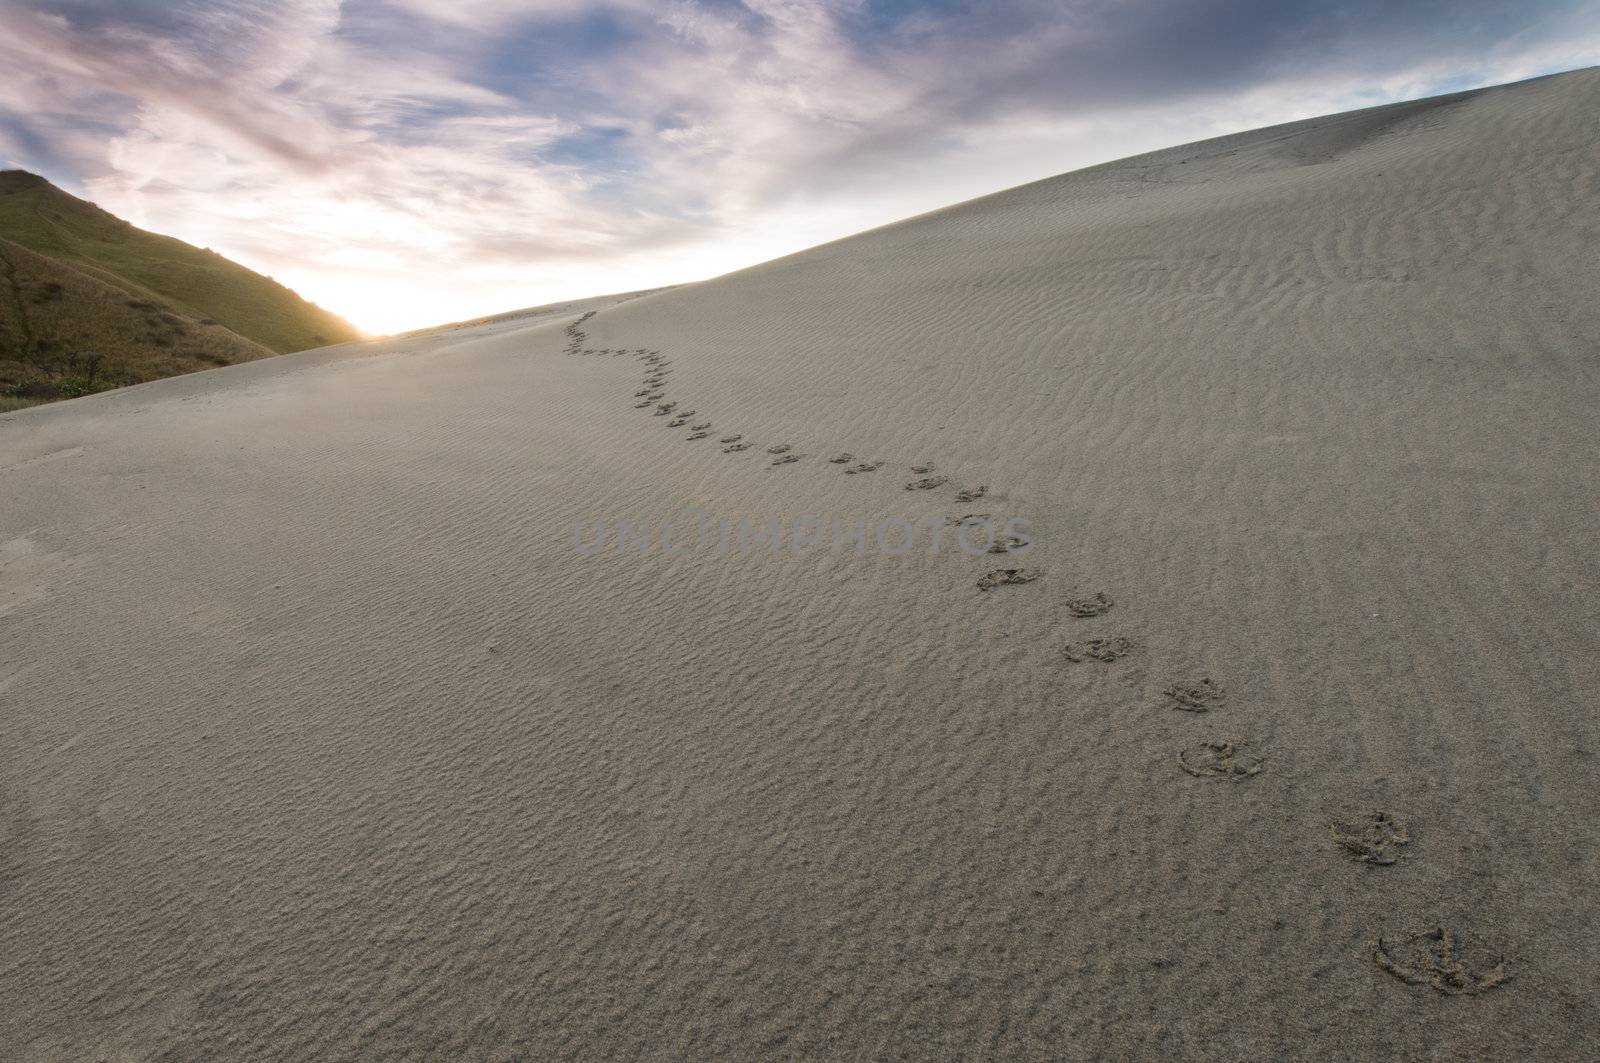 Footprints in sand  by 3523Studio